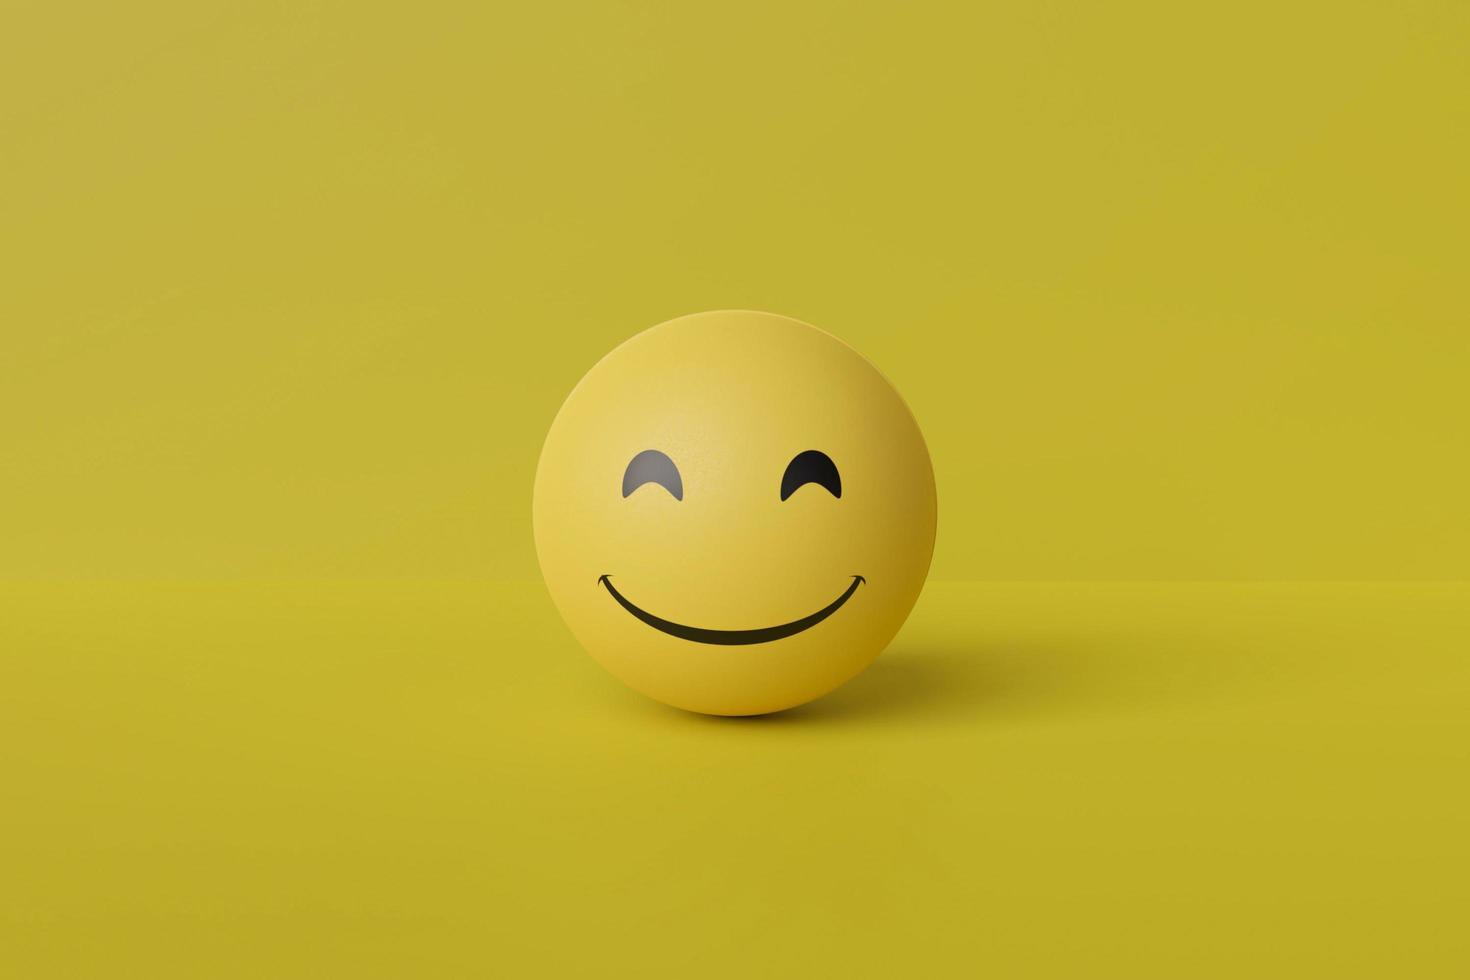 sourire emoji avec fond jaune rendu 3d photo